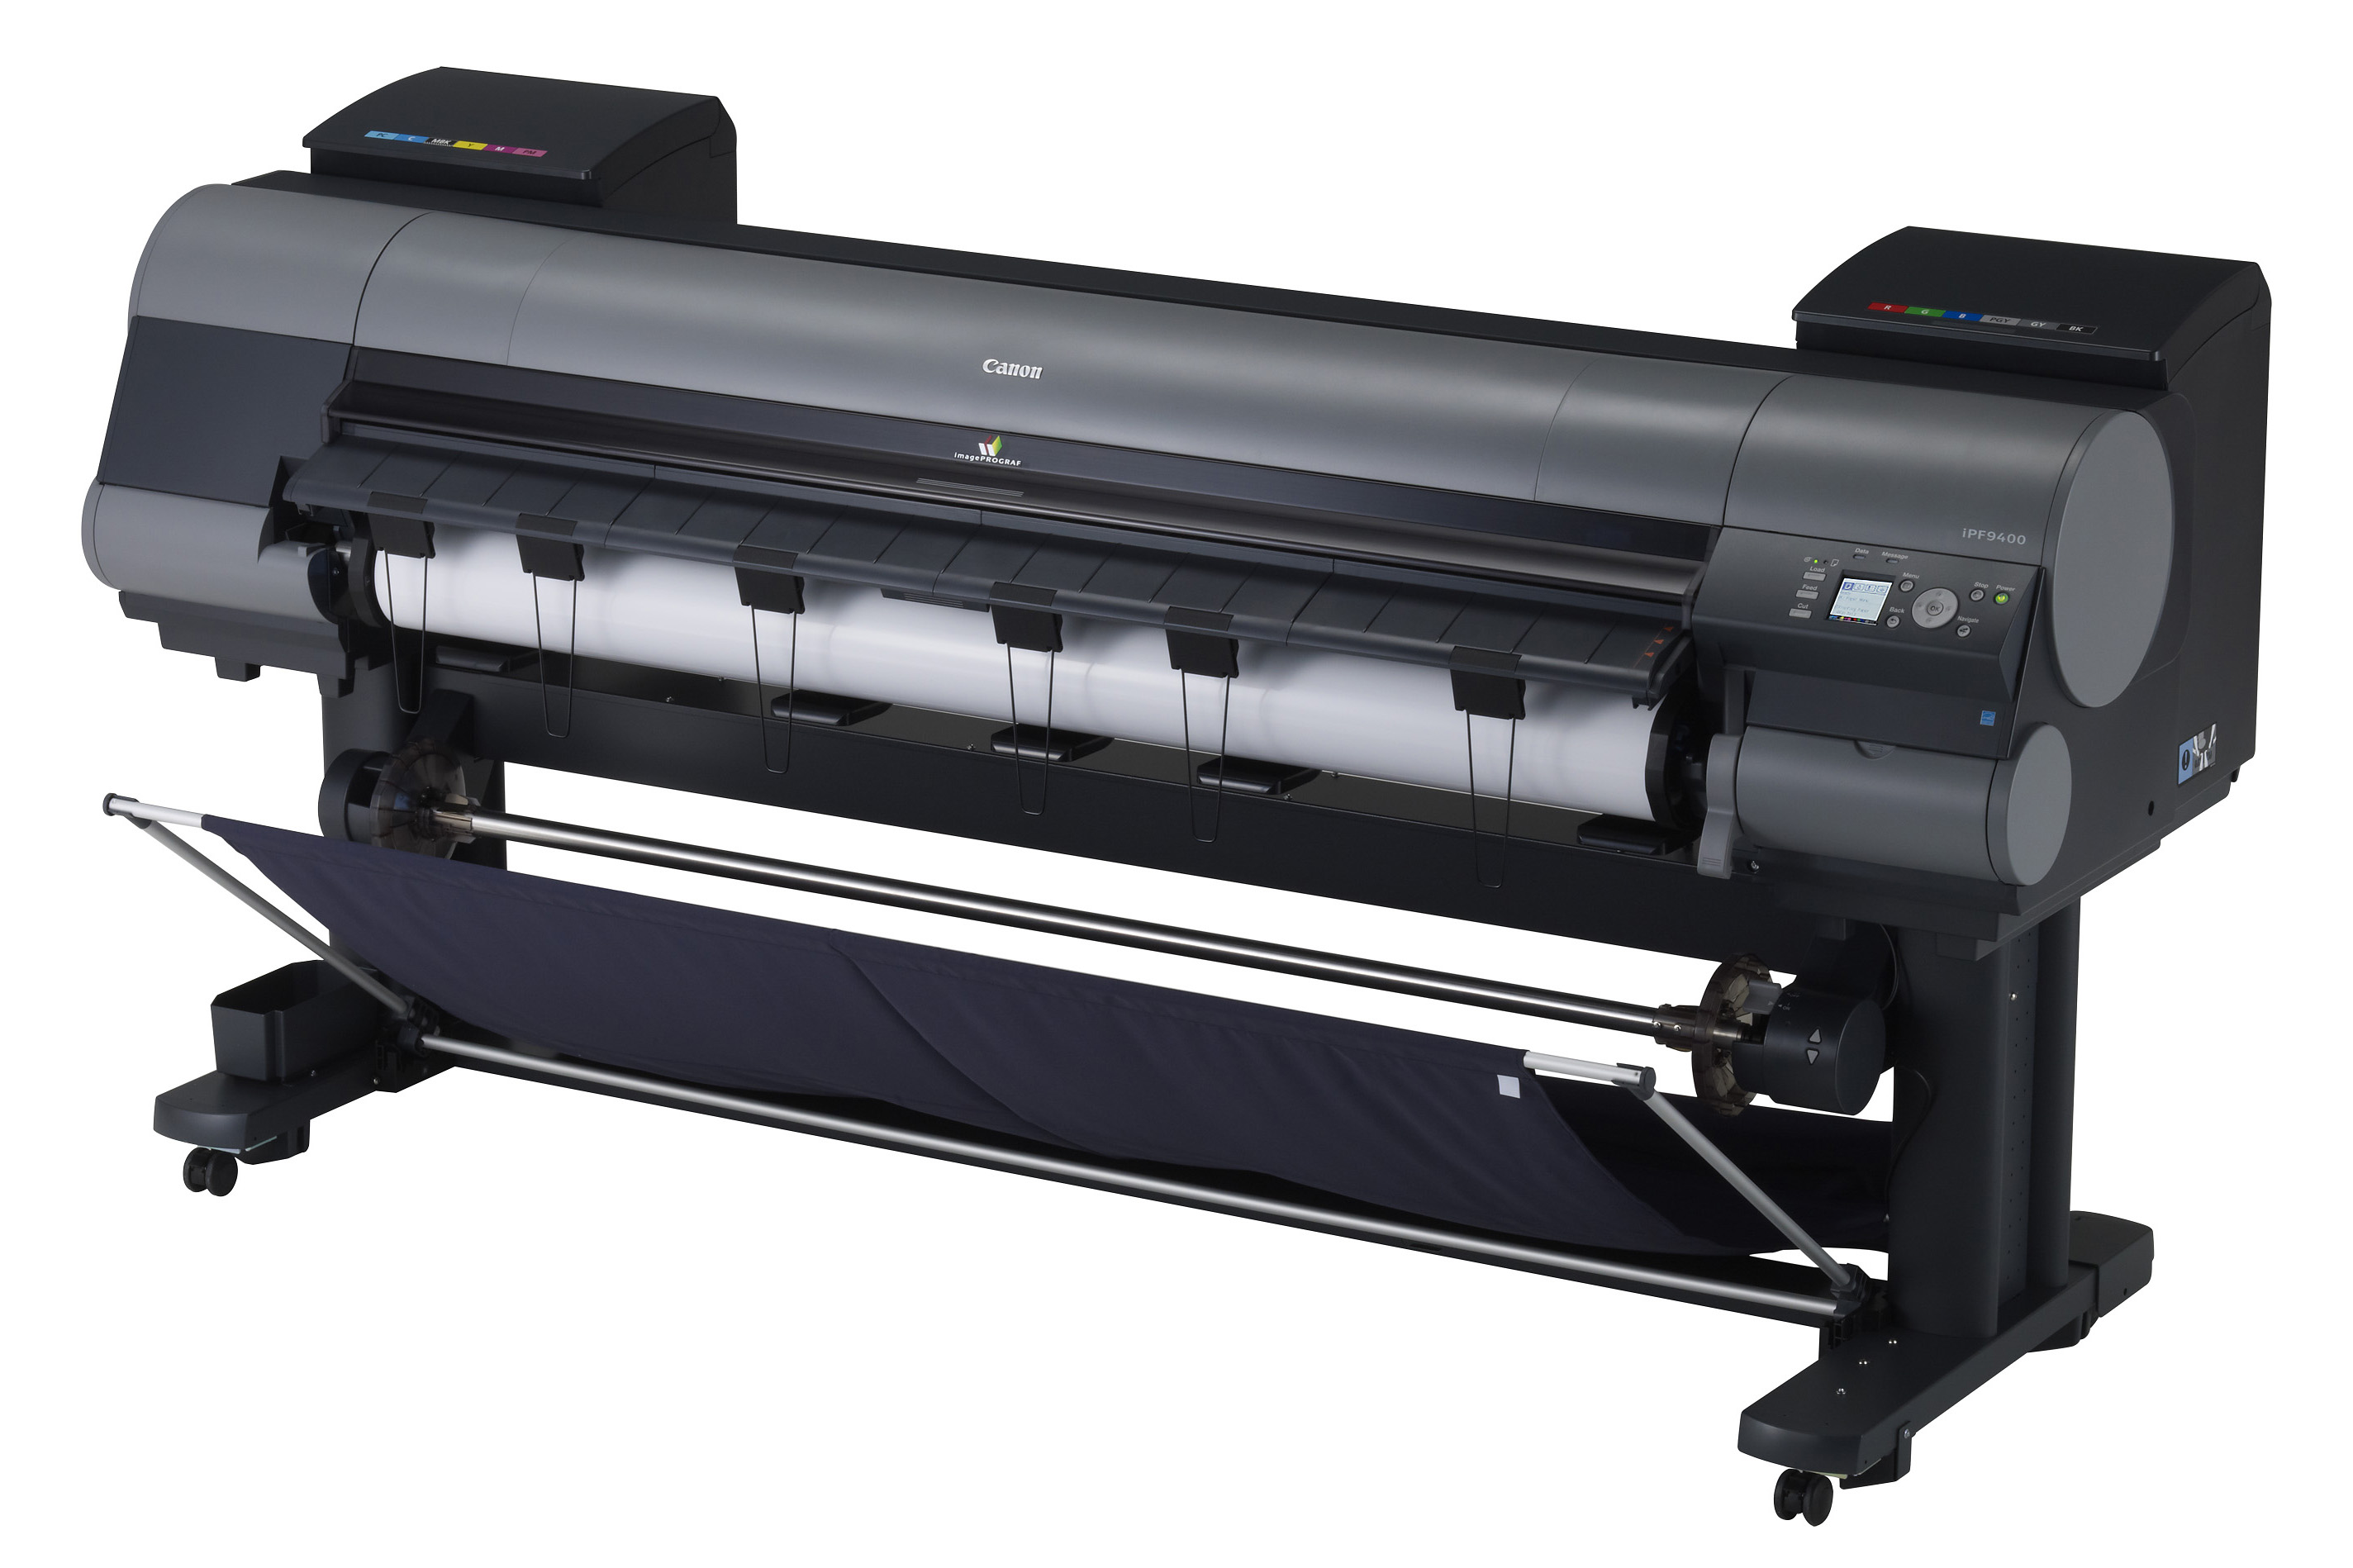 new-canon-inkjet-printer-mail-in-rebates-of-up-to-1-400-at-lexjet-lexjet-blog